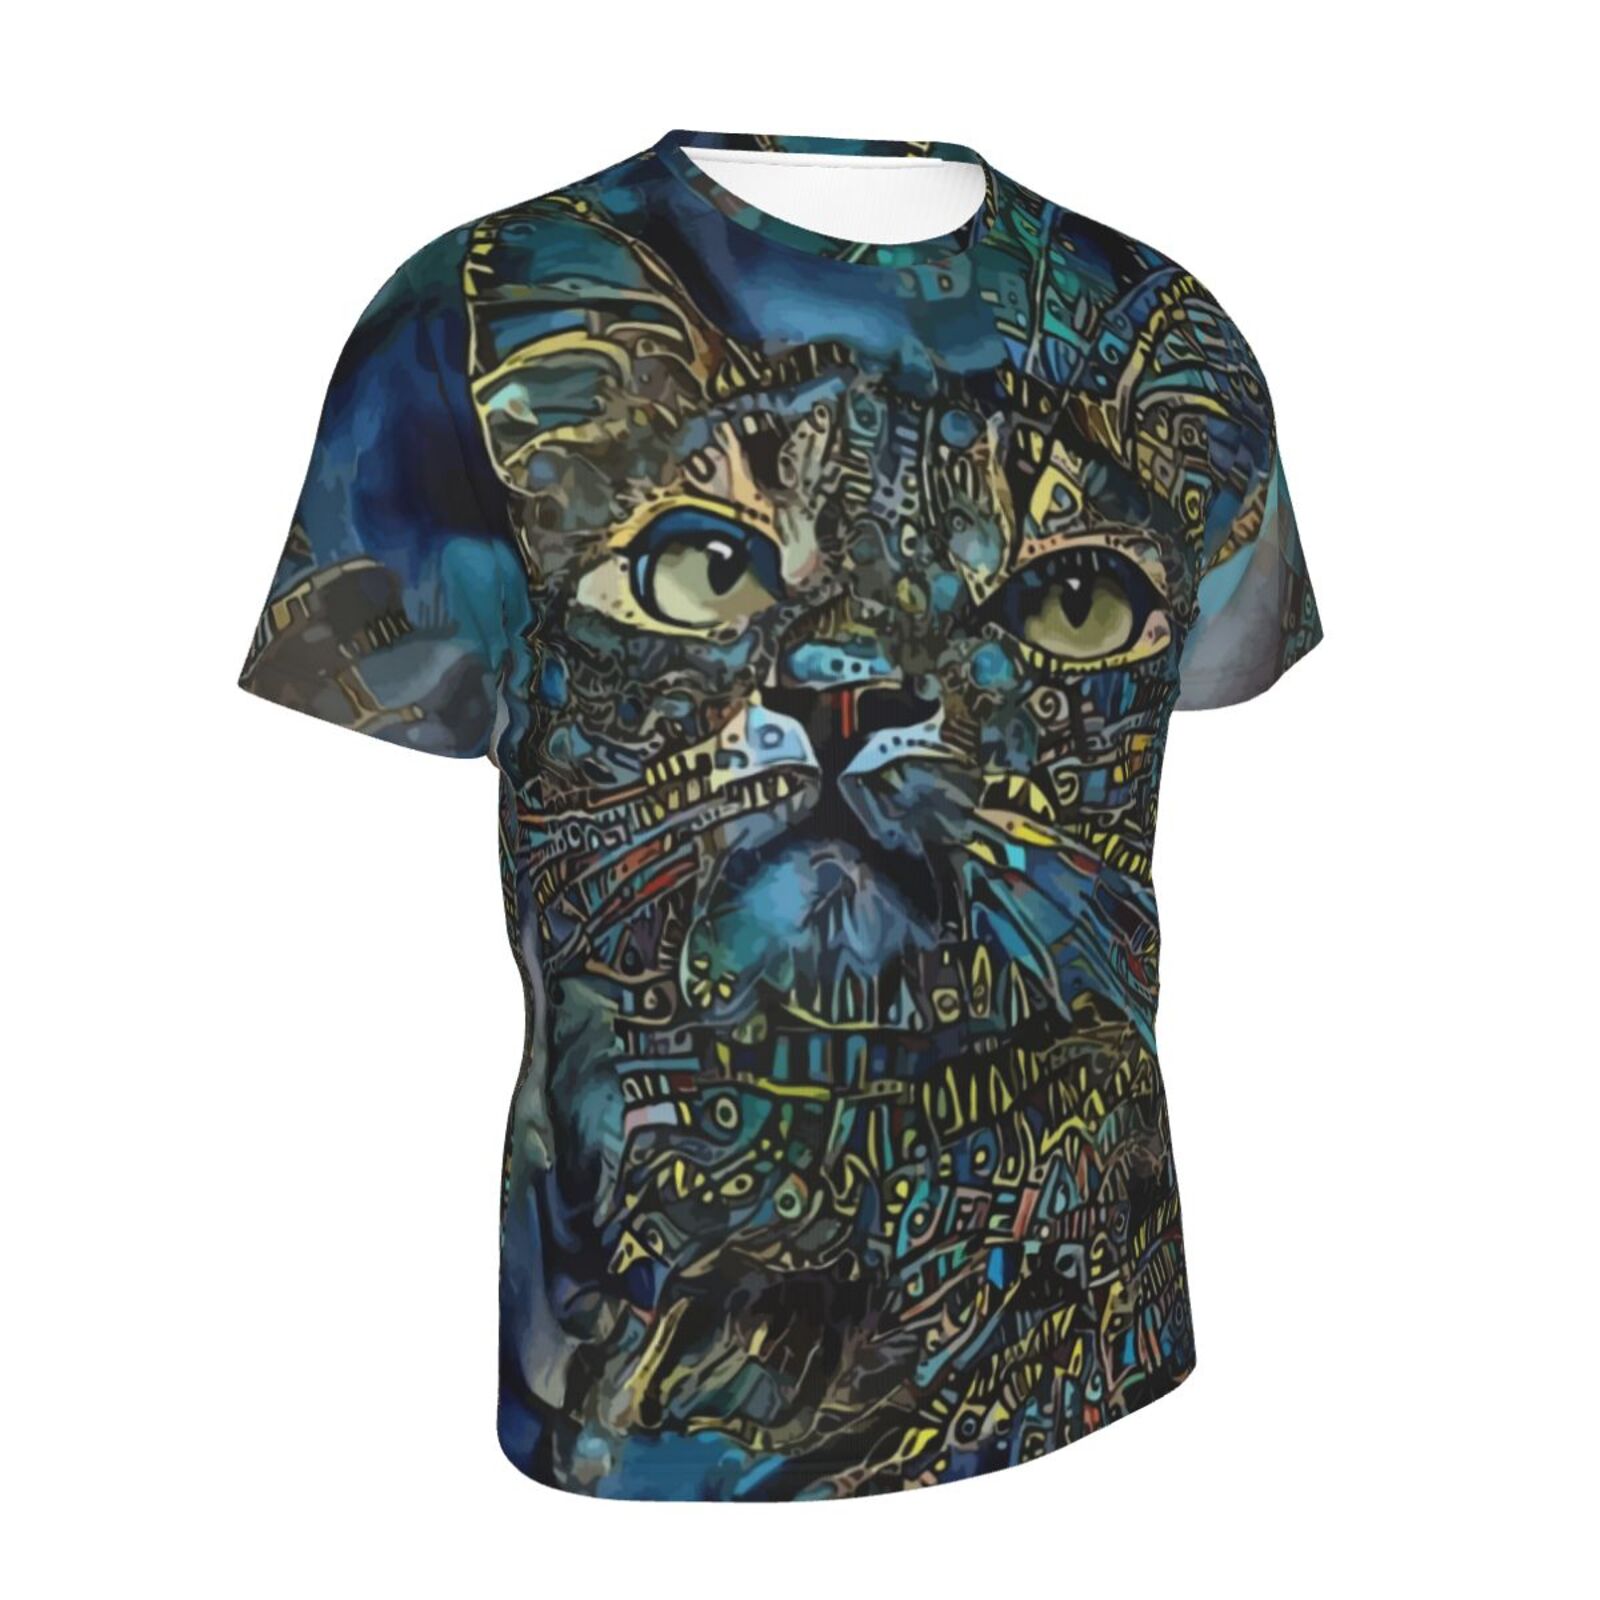 Tzany Katze Medien Mischen Elemente Klassisch T Shirt